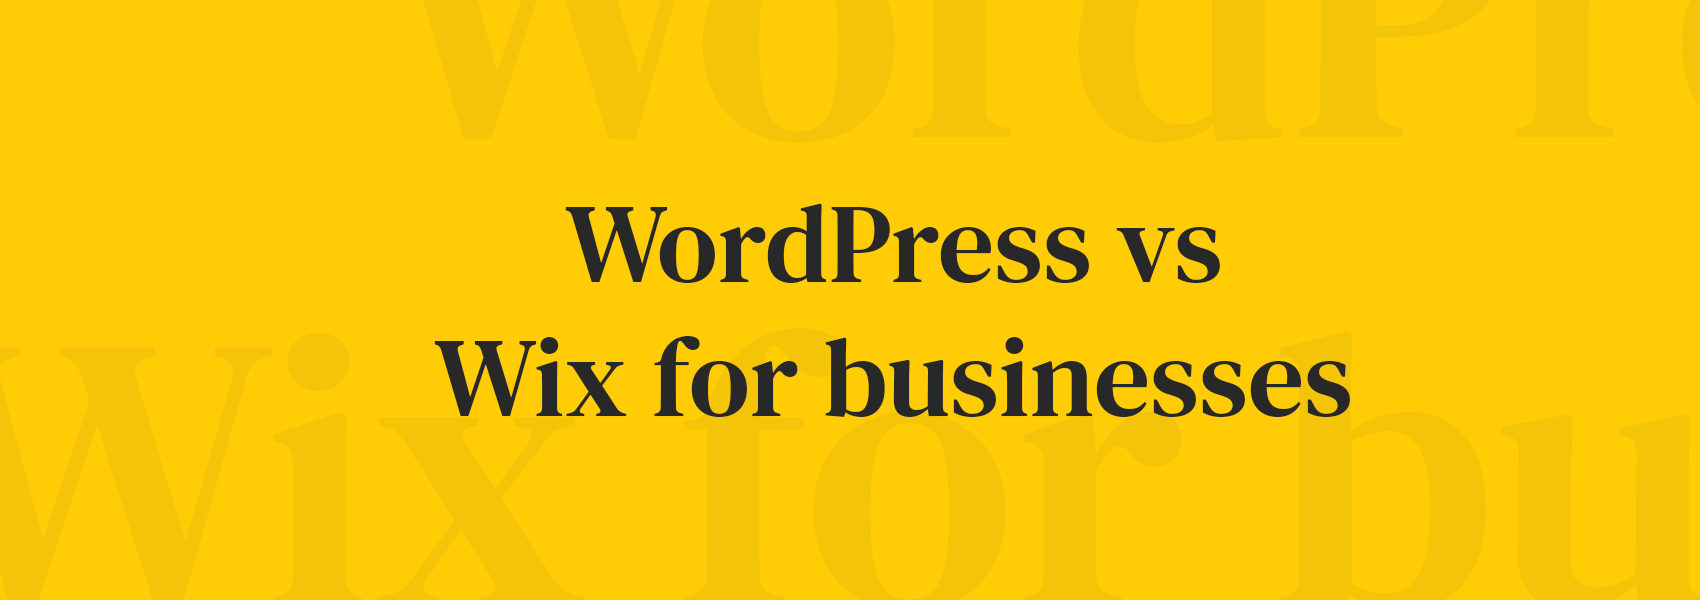 Wordpress vs wix blog banner